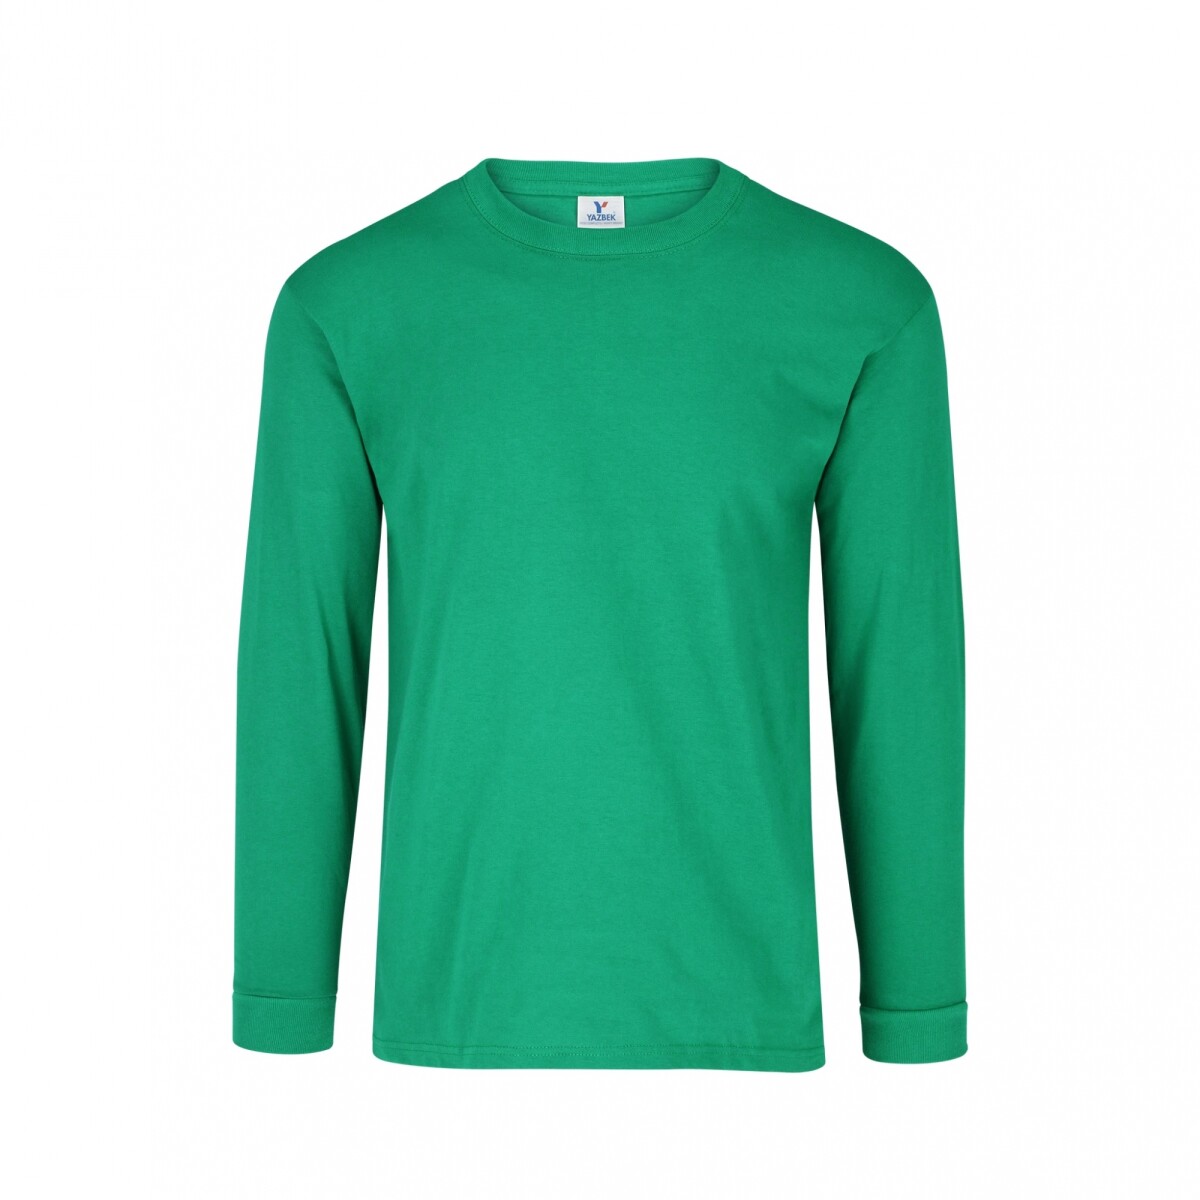 Camiseta a la base manga larga - Verde jade 